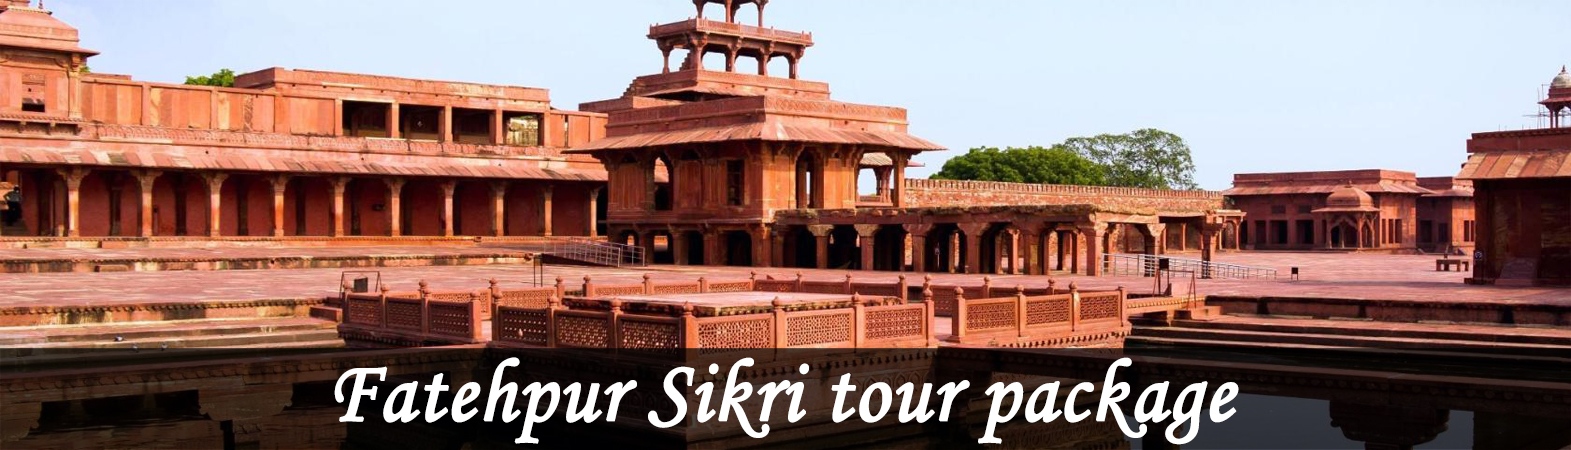 Fatehpur Sikri & Agra Tour package